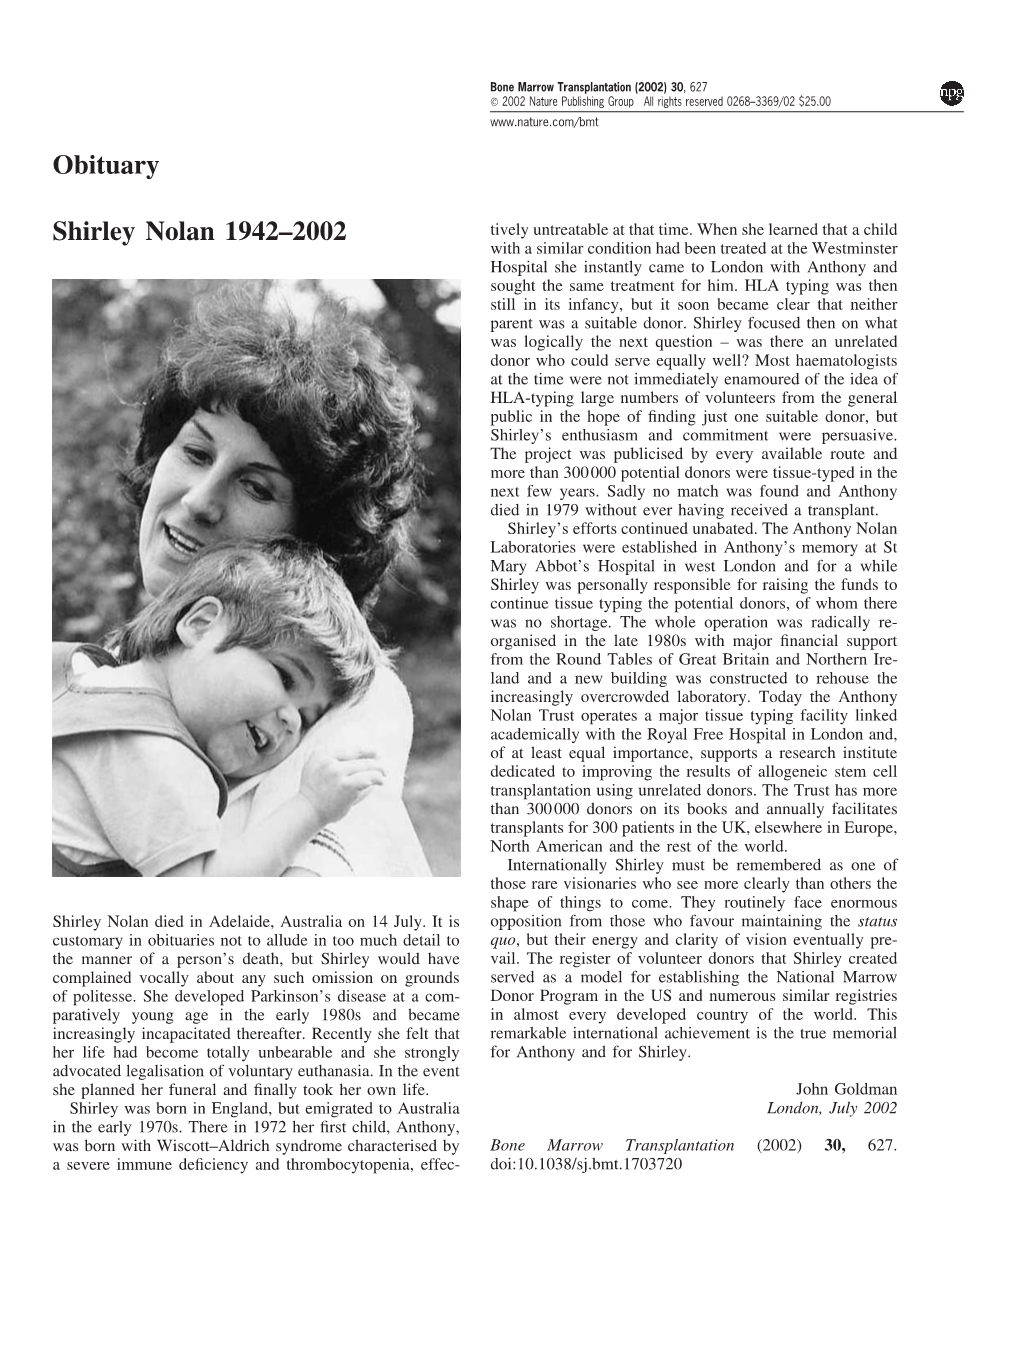 Obituary Shirley Nolan 1942–2002